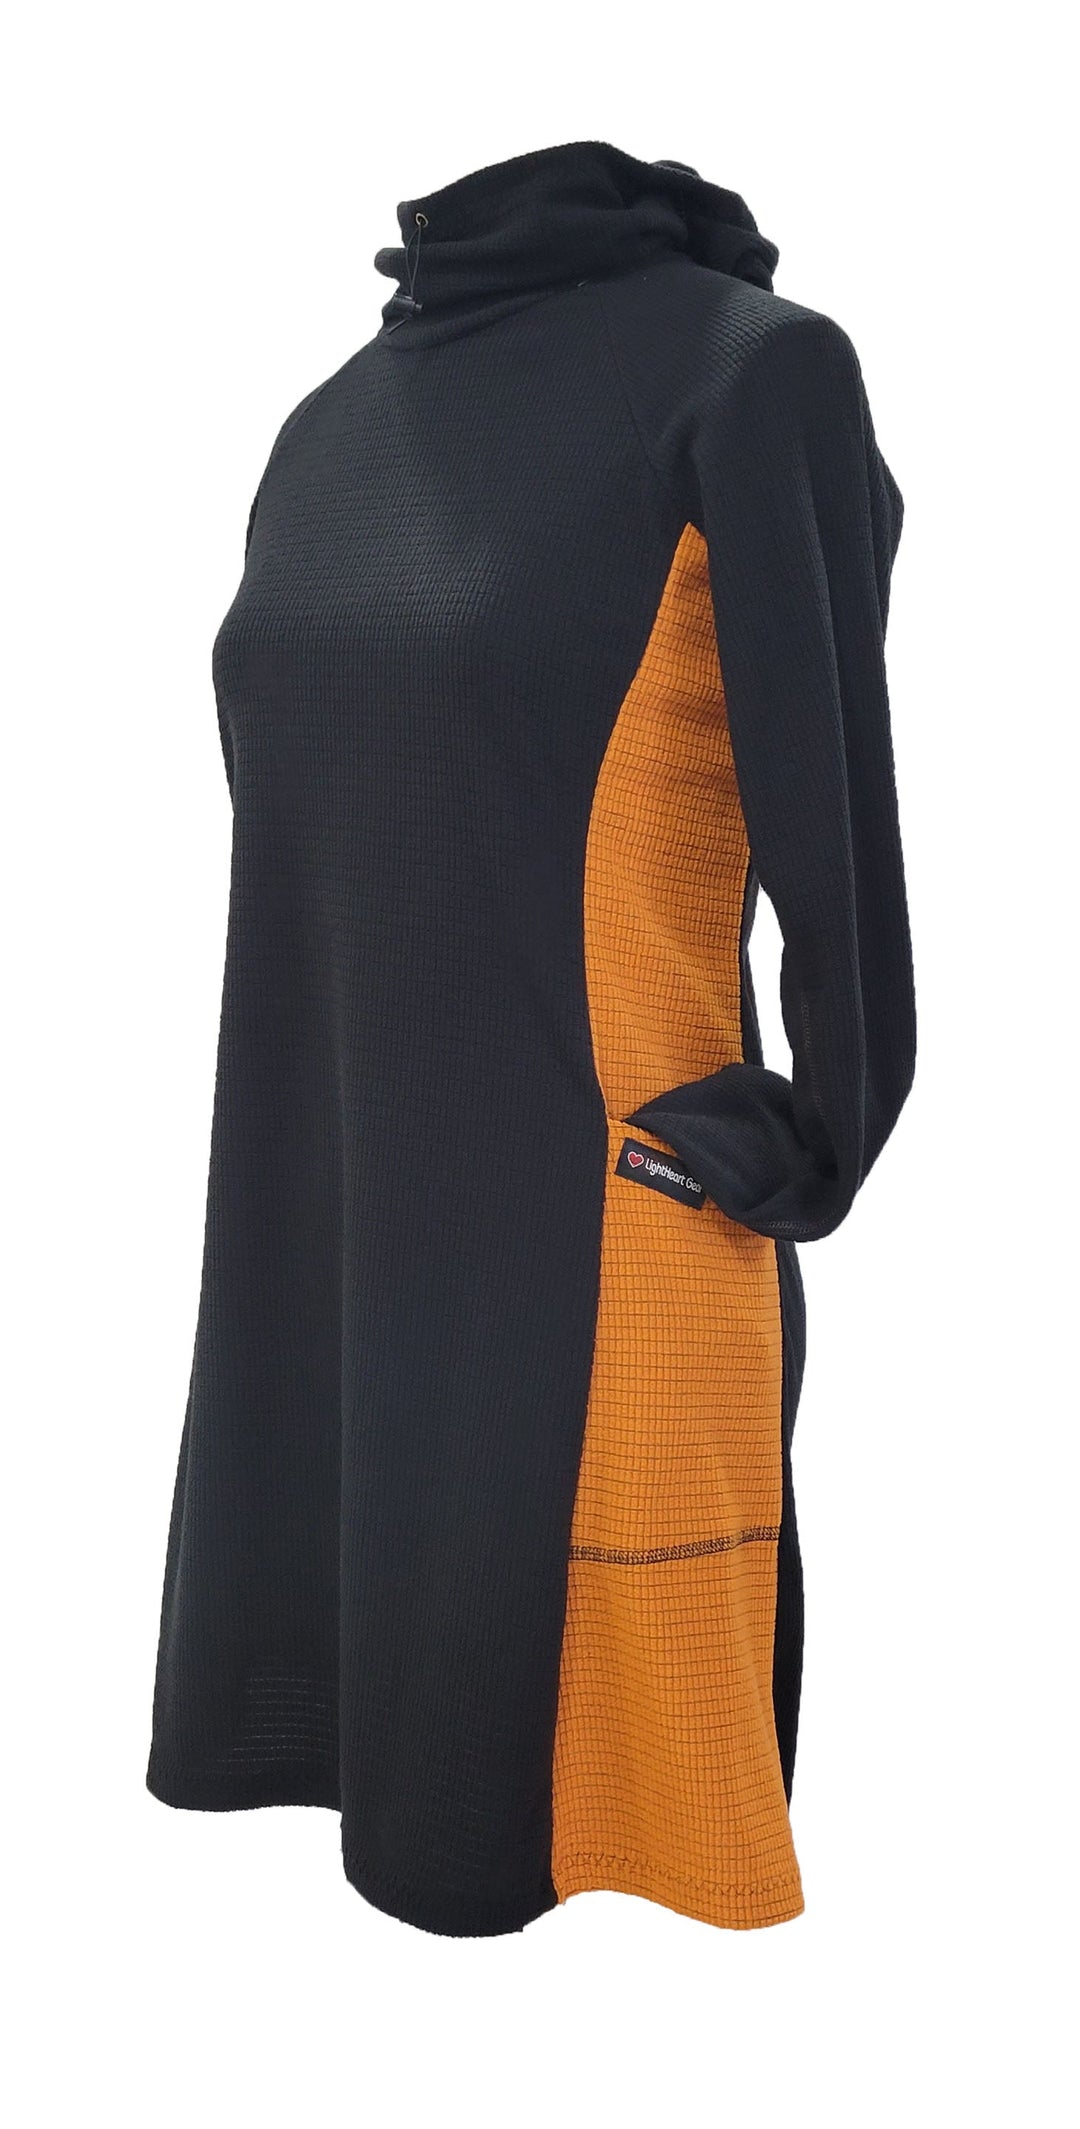 Fleece dress - Black & Orange